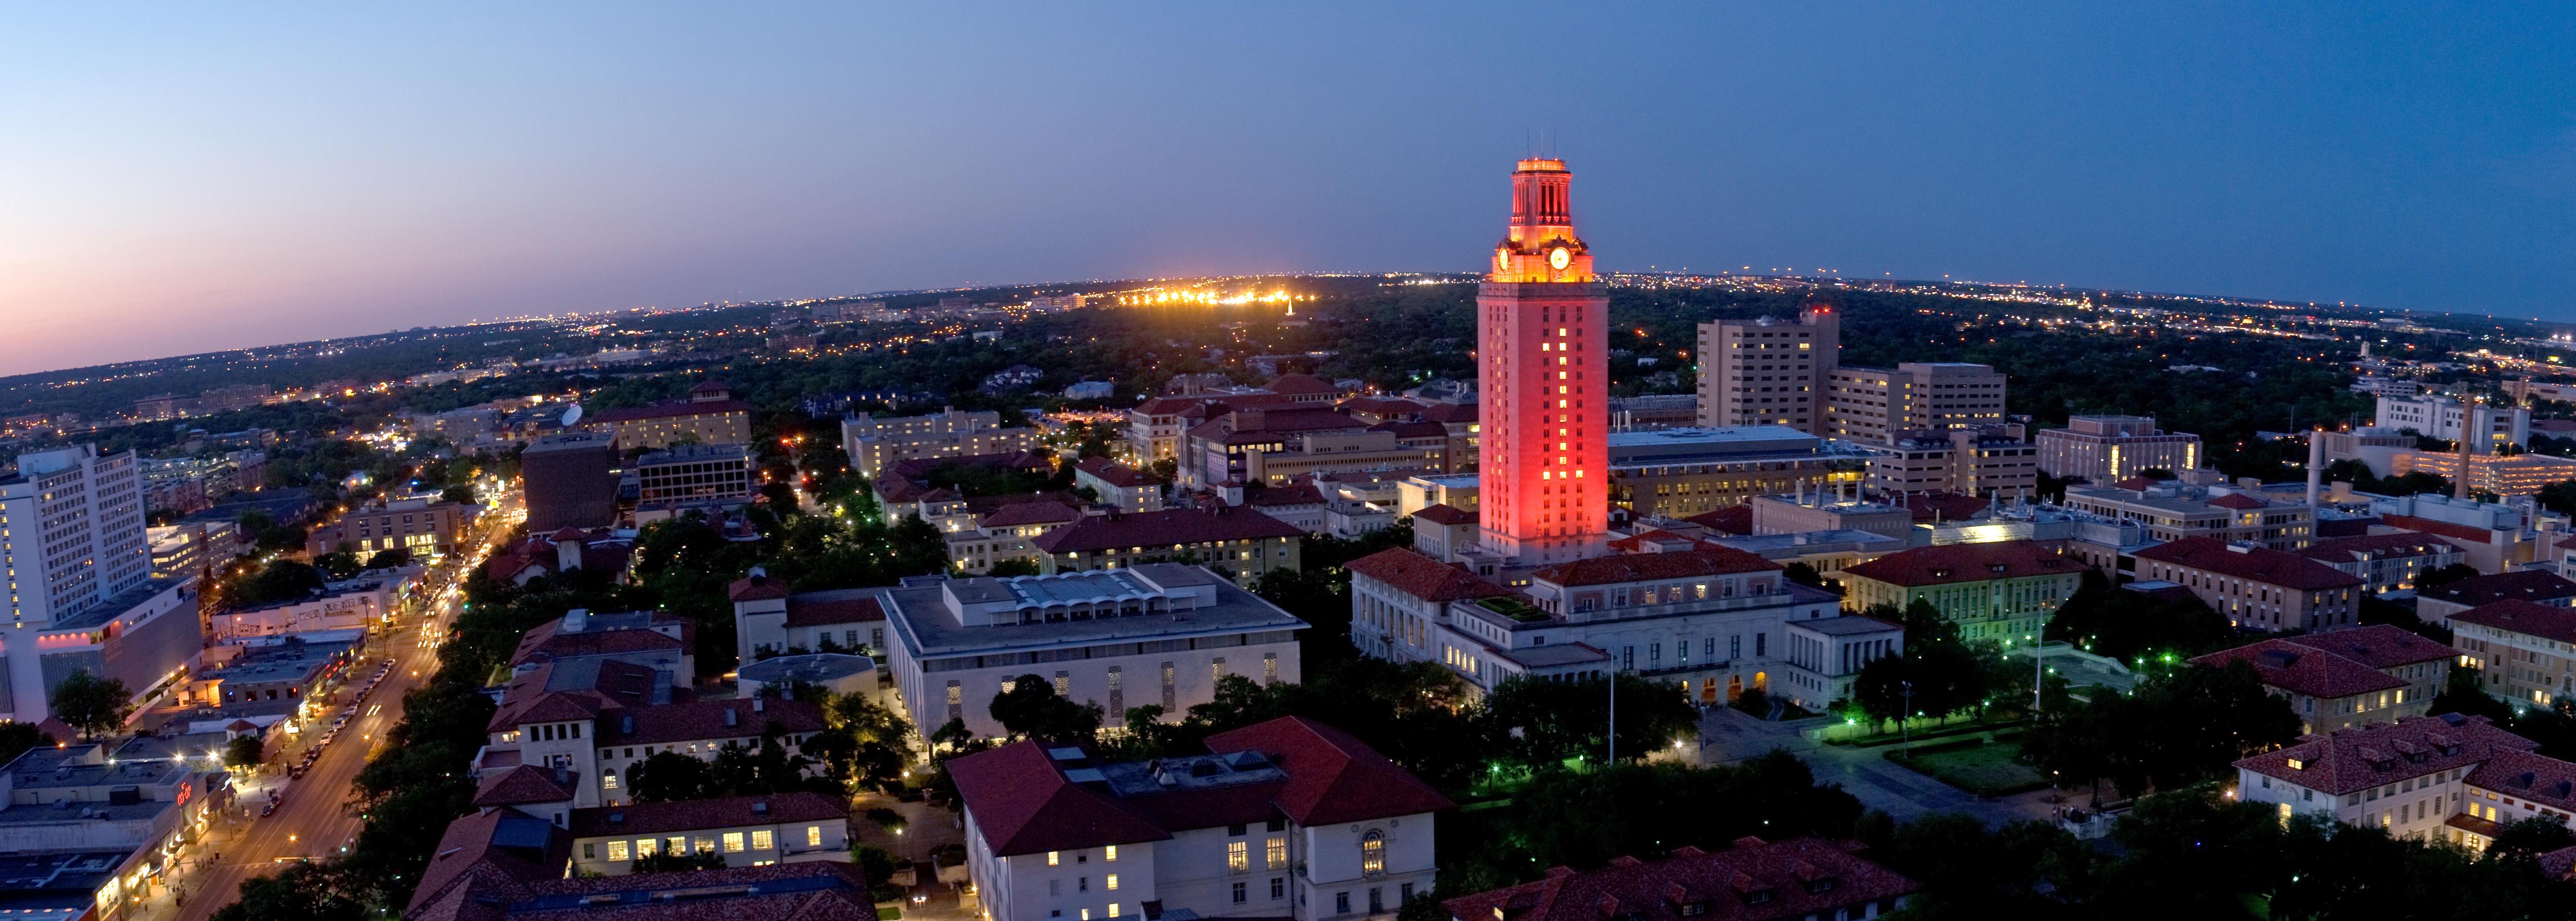 UT tower lit orange